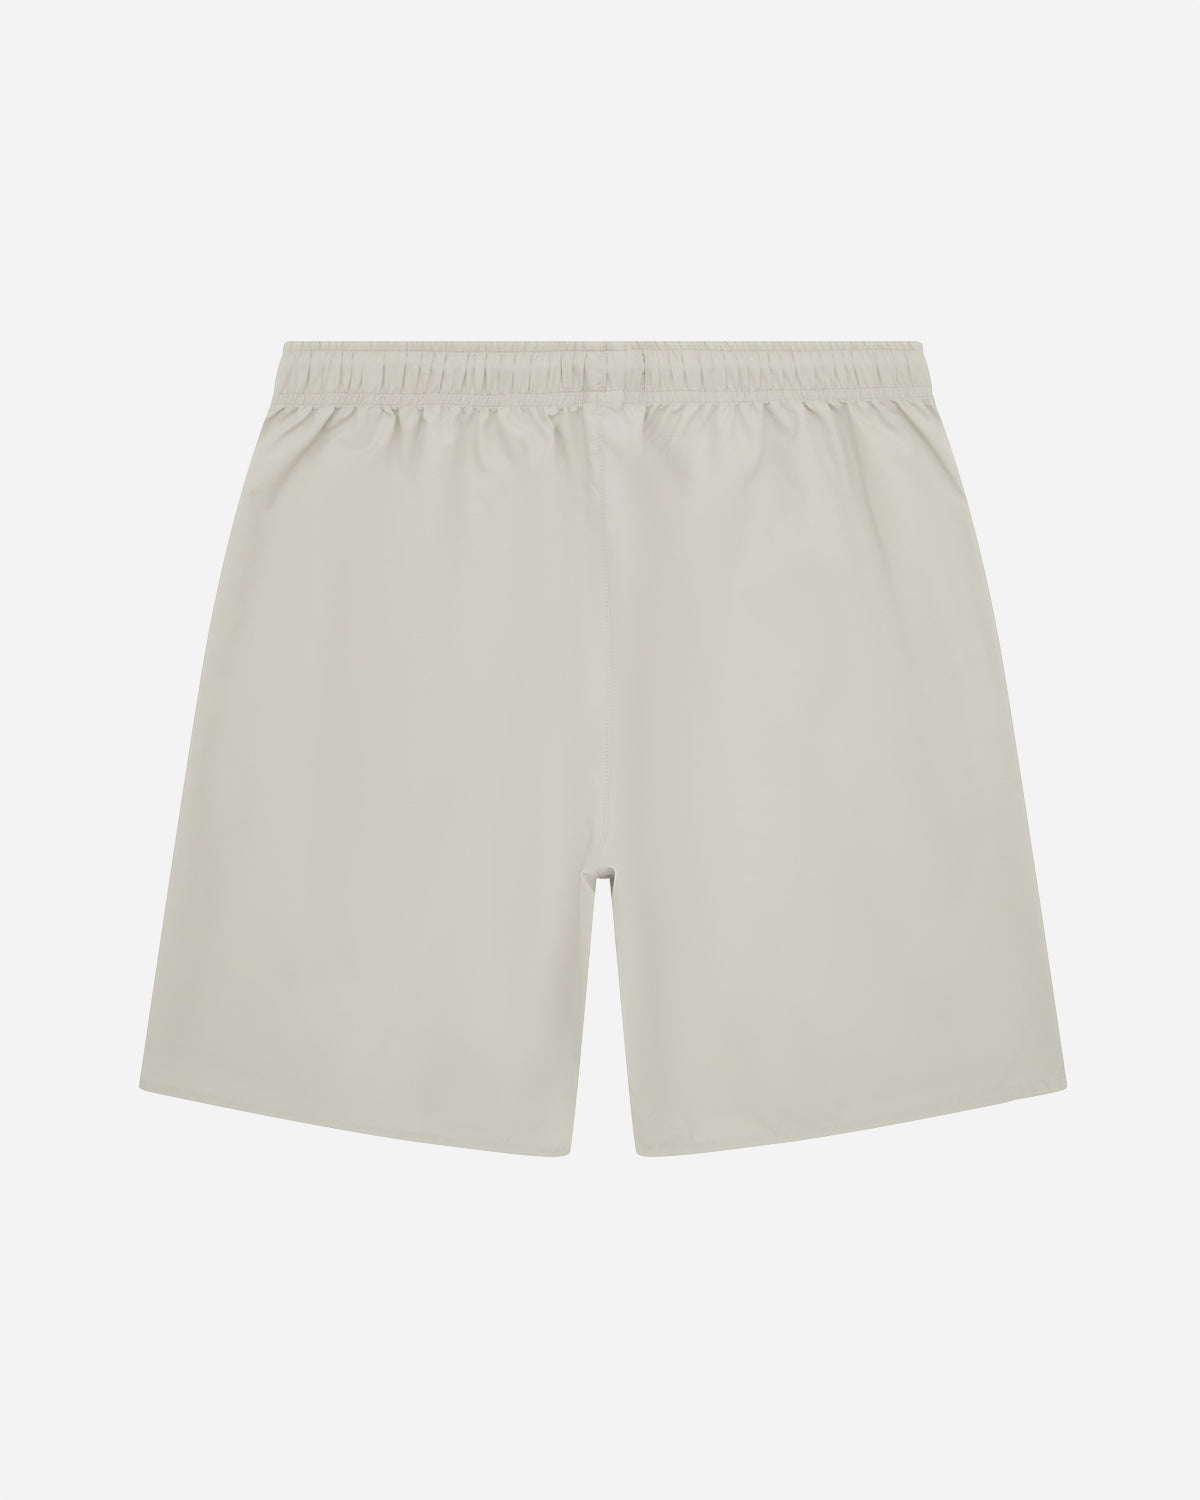 Haiden Tech Shorts - Light Grey